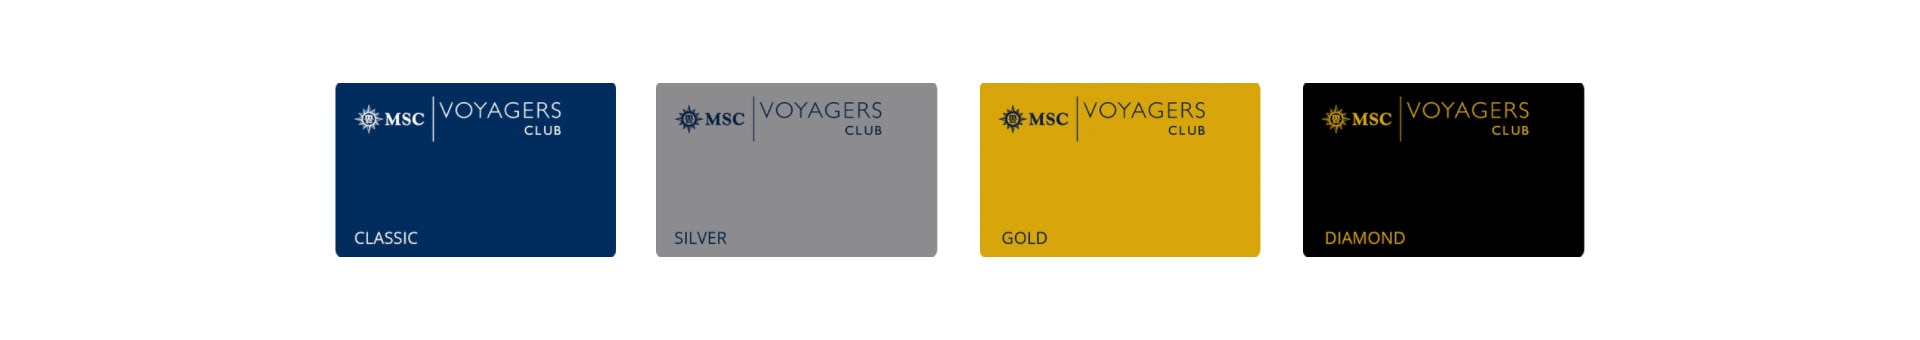 MSC Voyagers Club | MSC Cruises